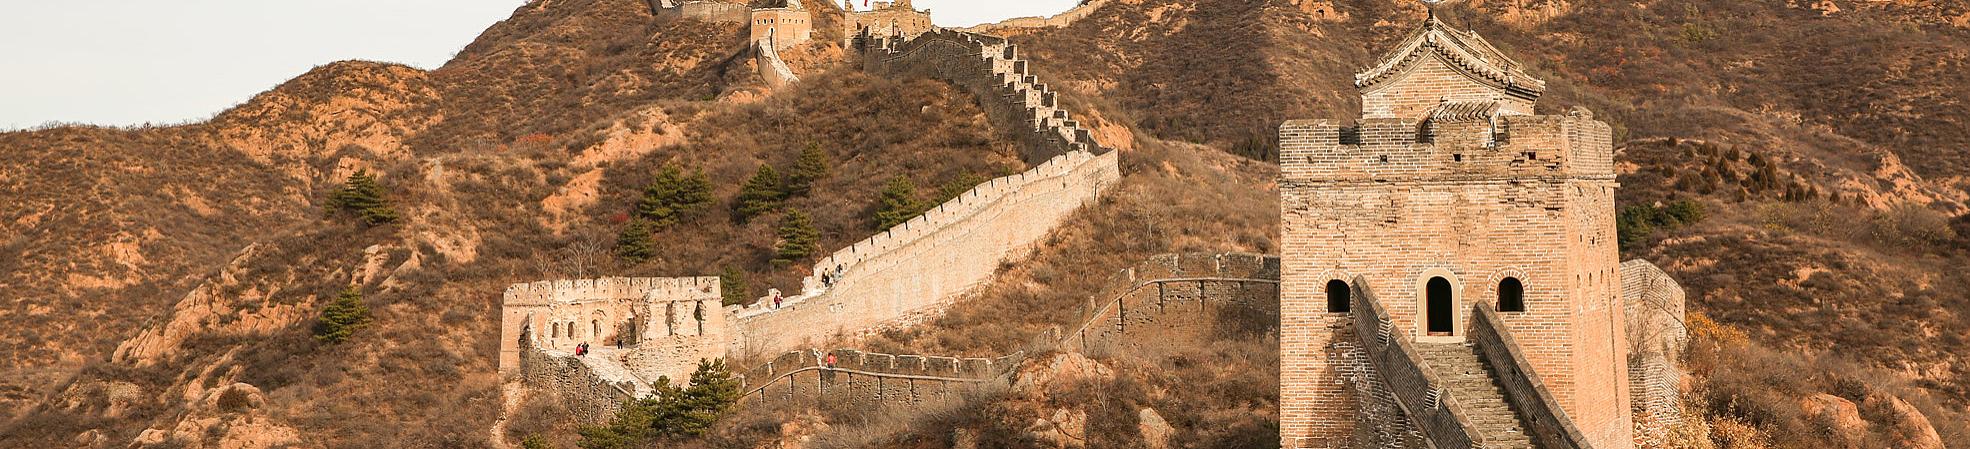 Simatai Great Wall Information and Tips 